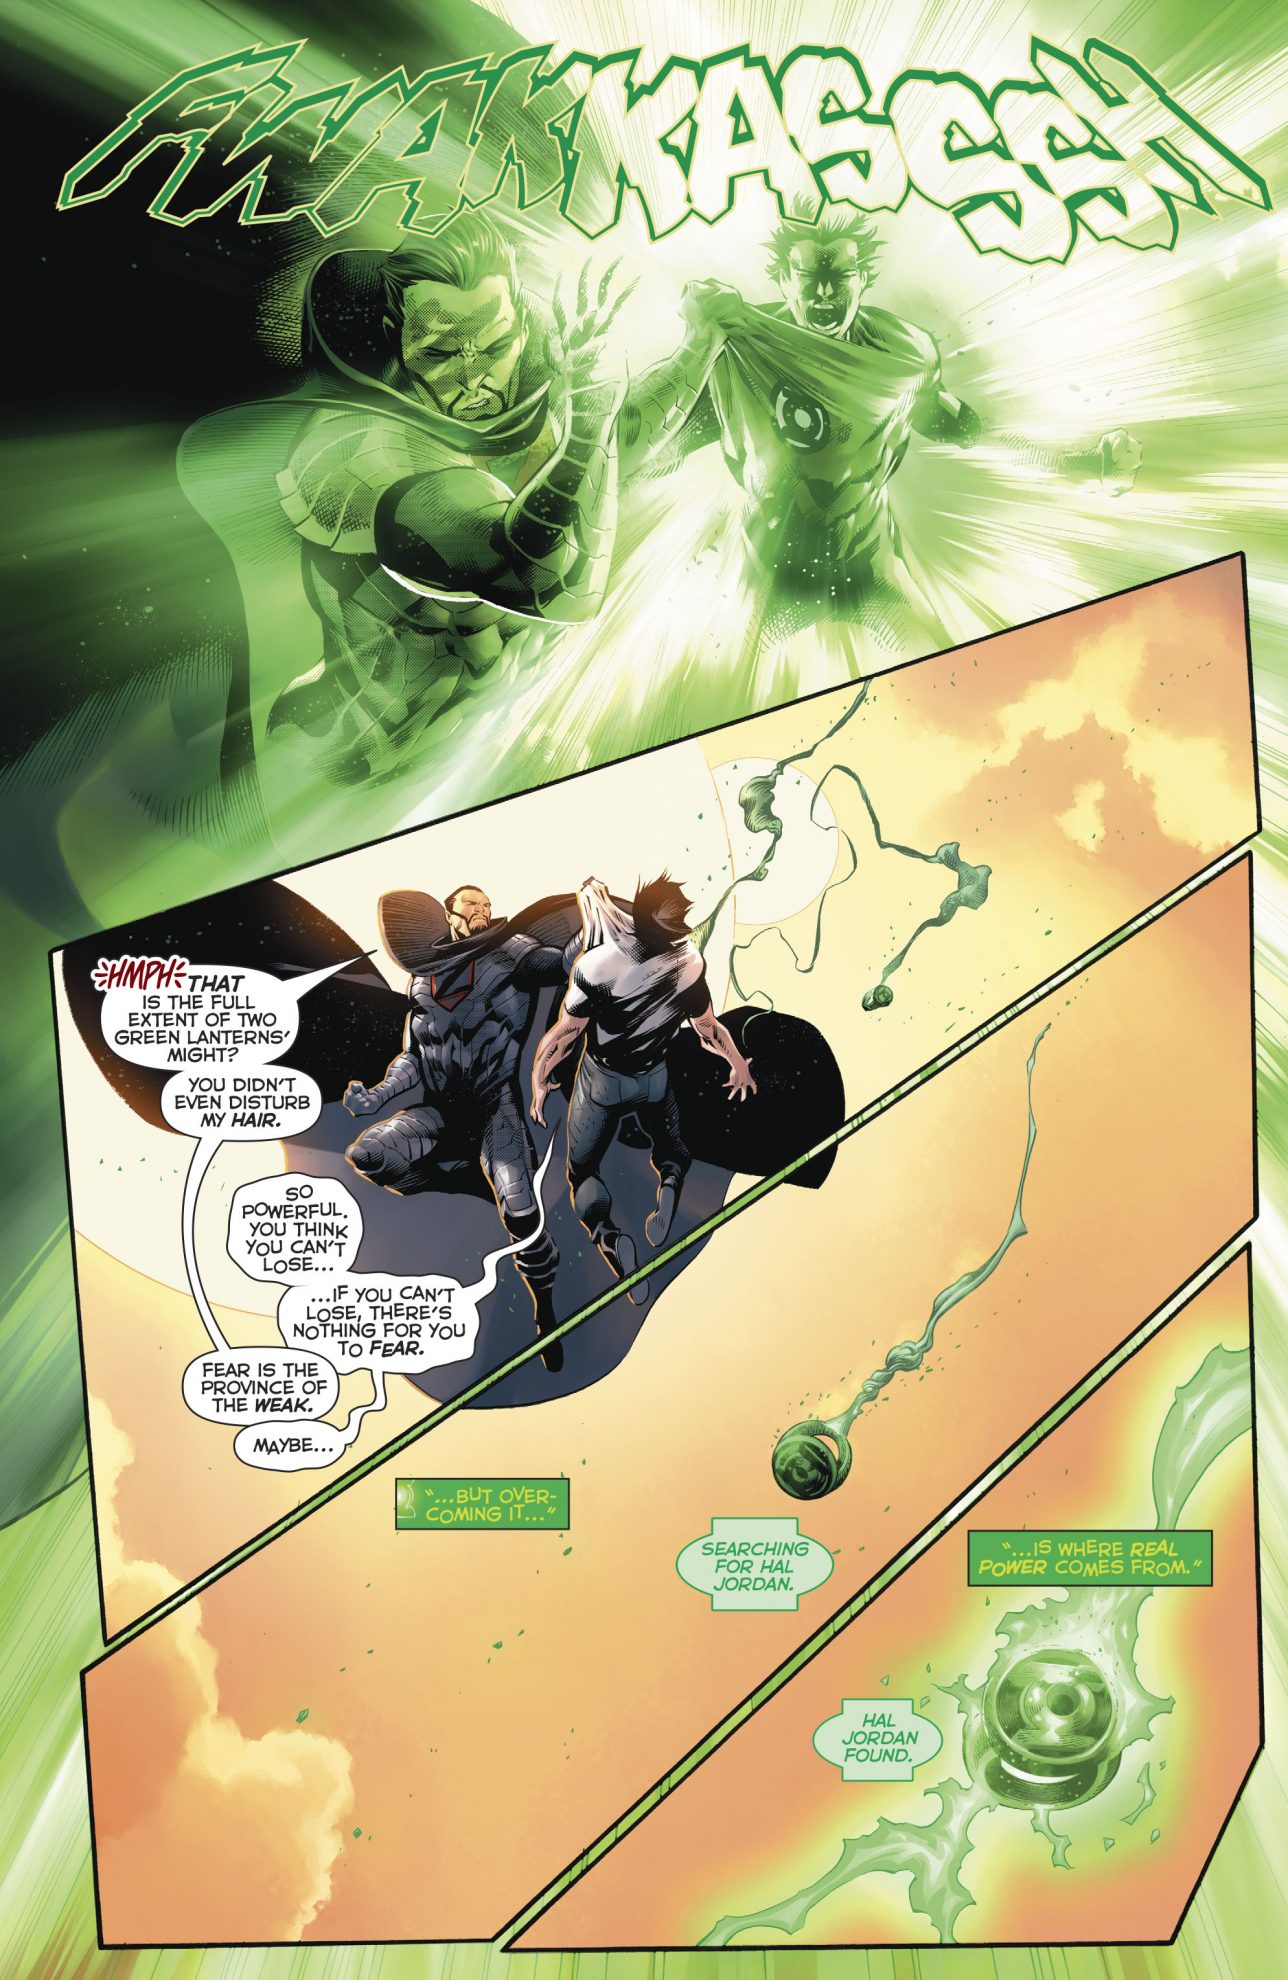 Green Lantern Kyle Rayner VS General Zod